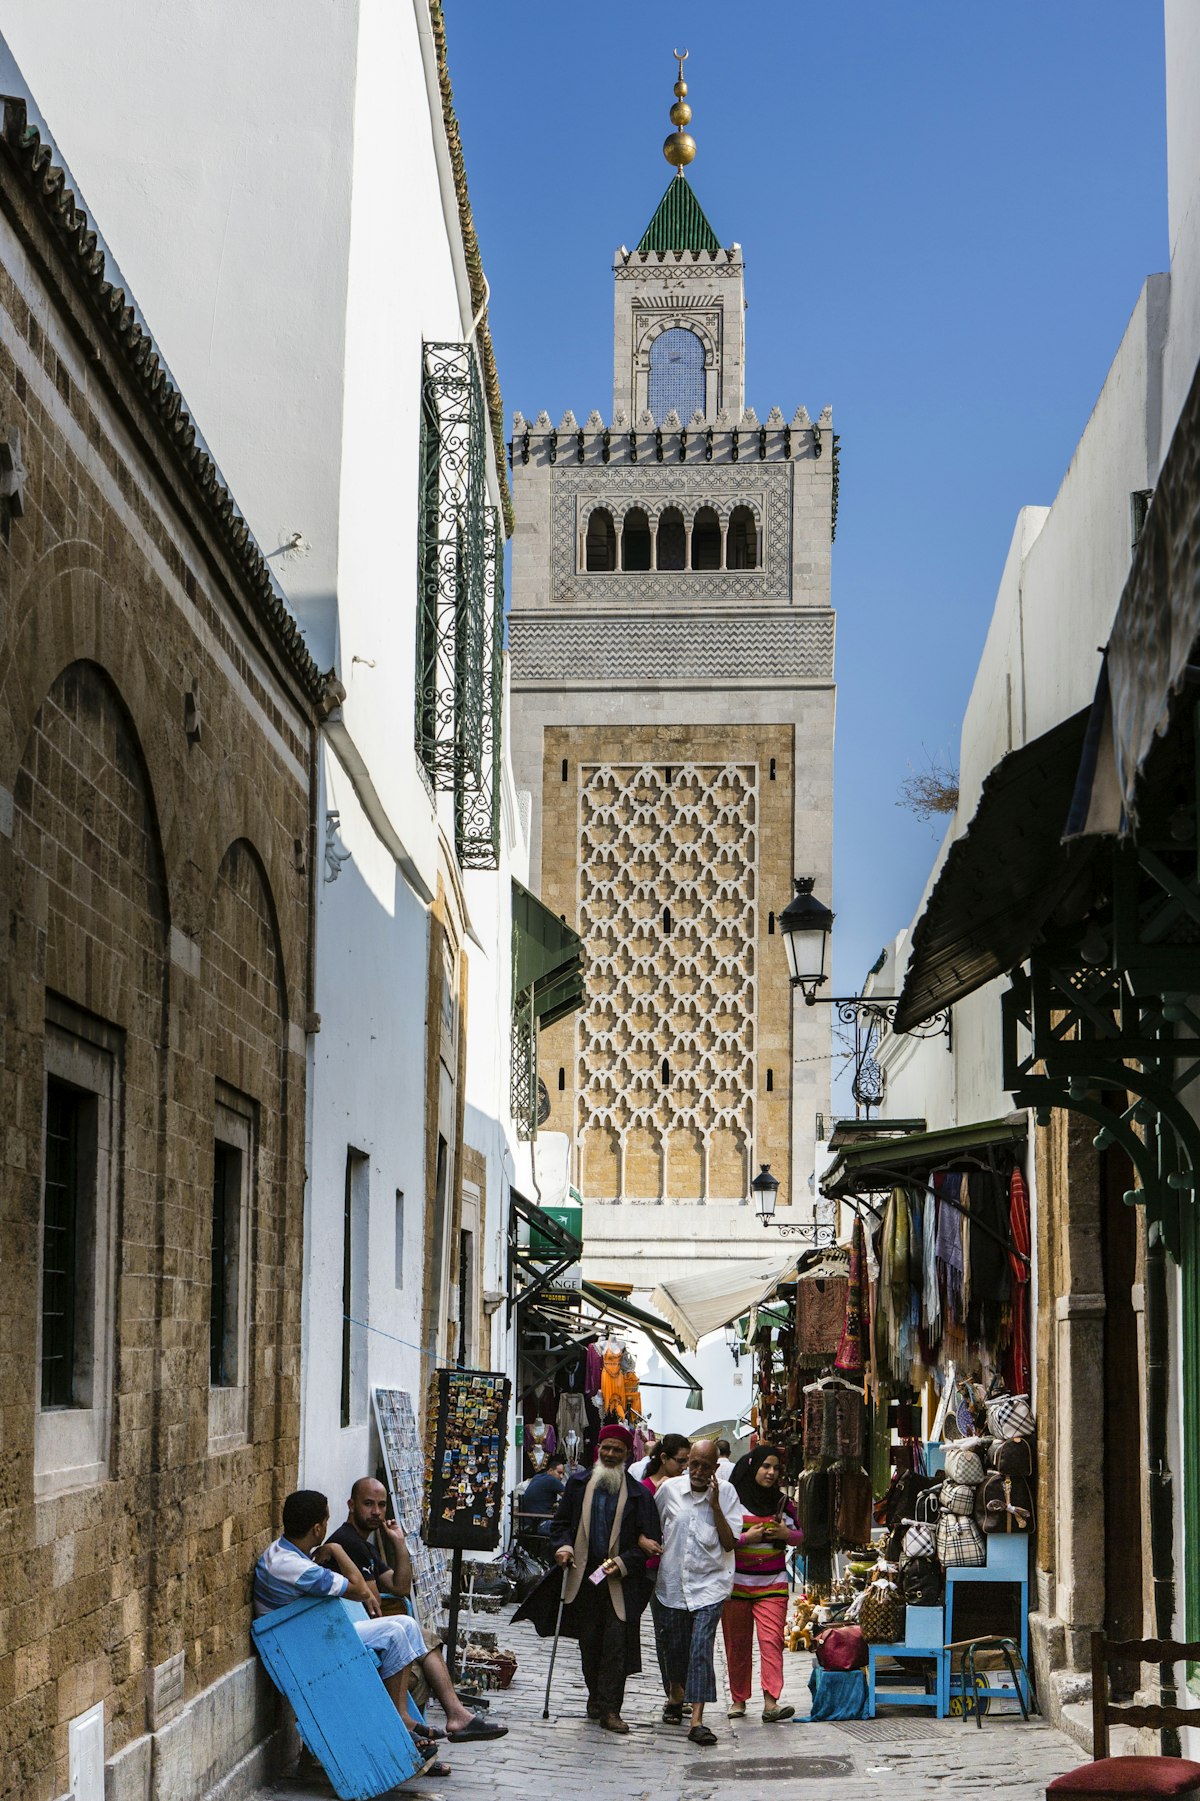 Zaytouna (Great) Mosque & street in Medina